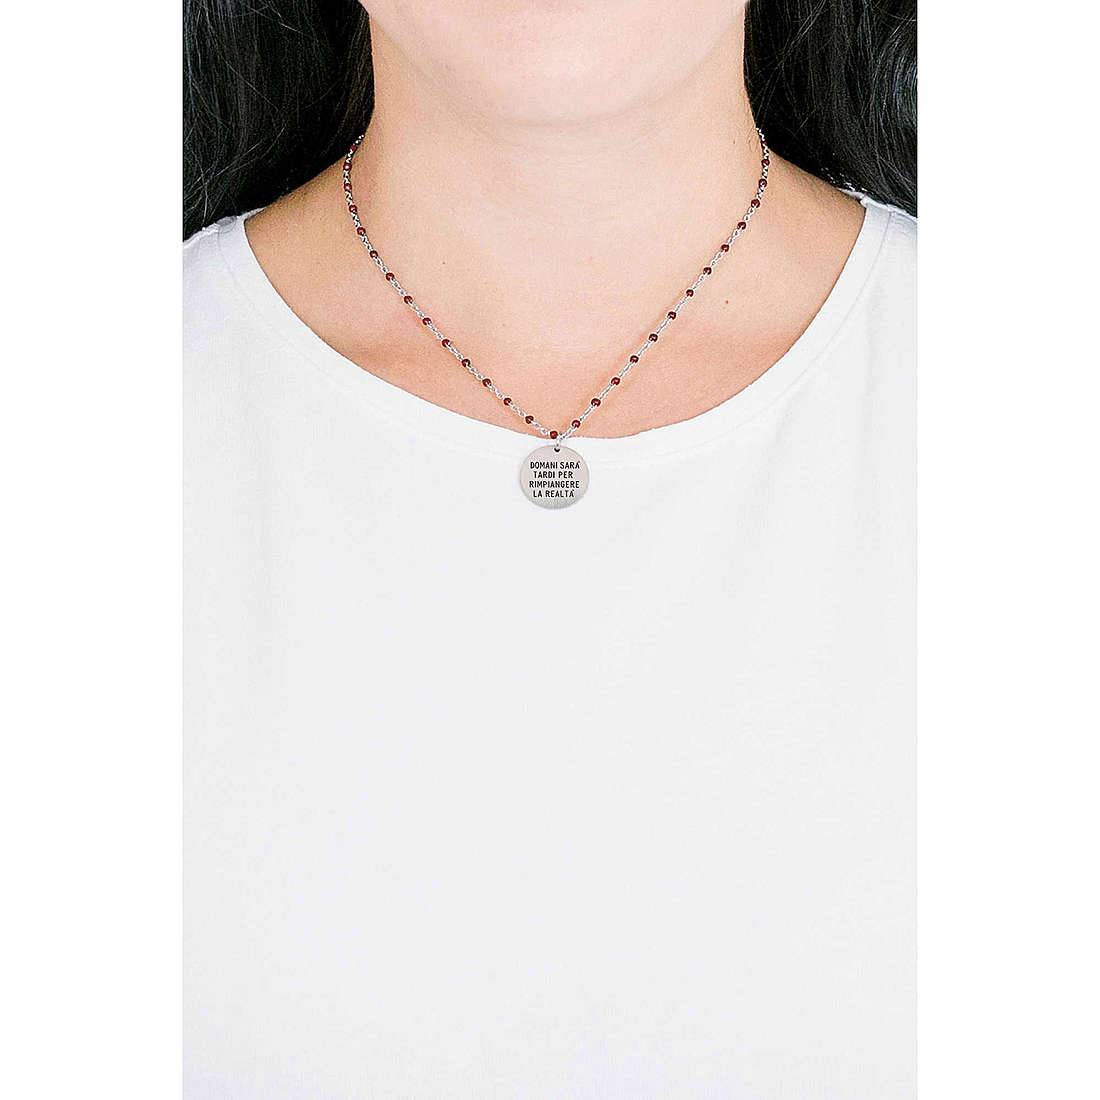 Kidult necklaces Philosophy woman 751138 wearing